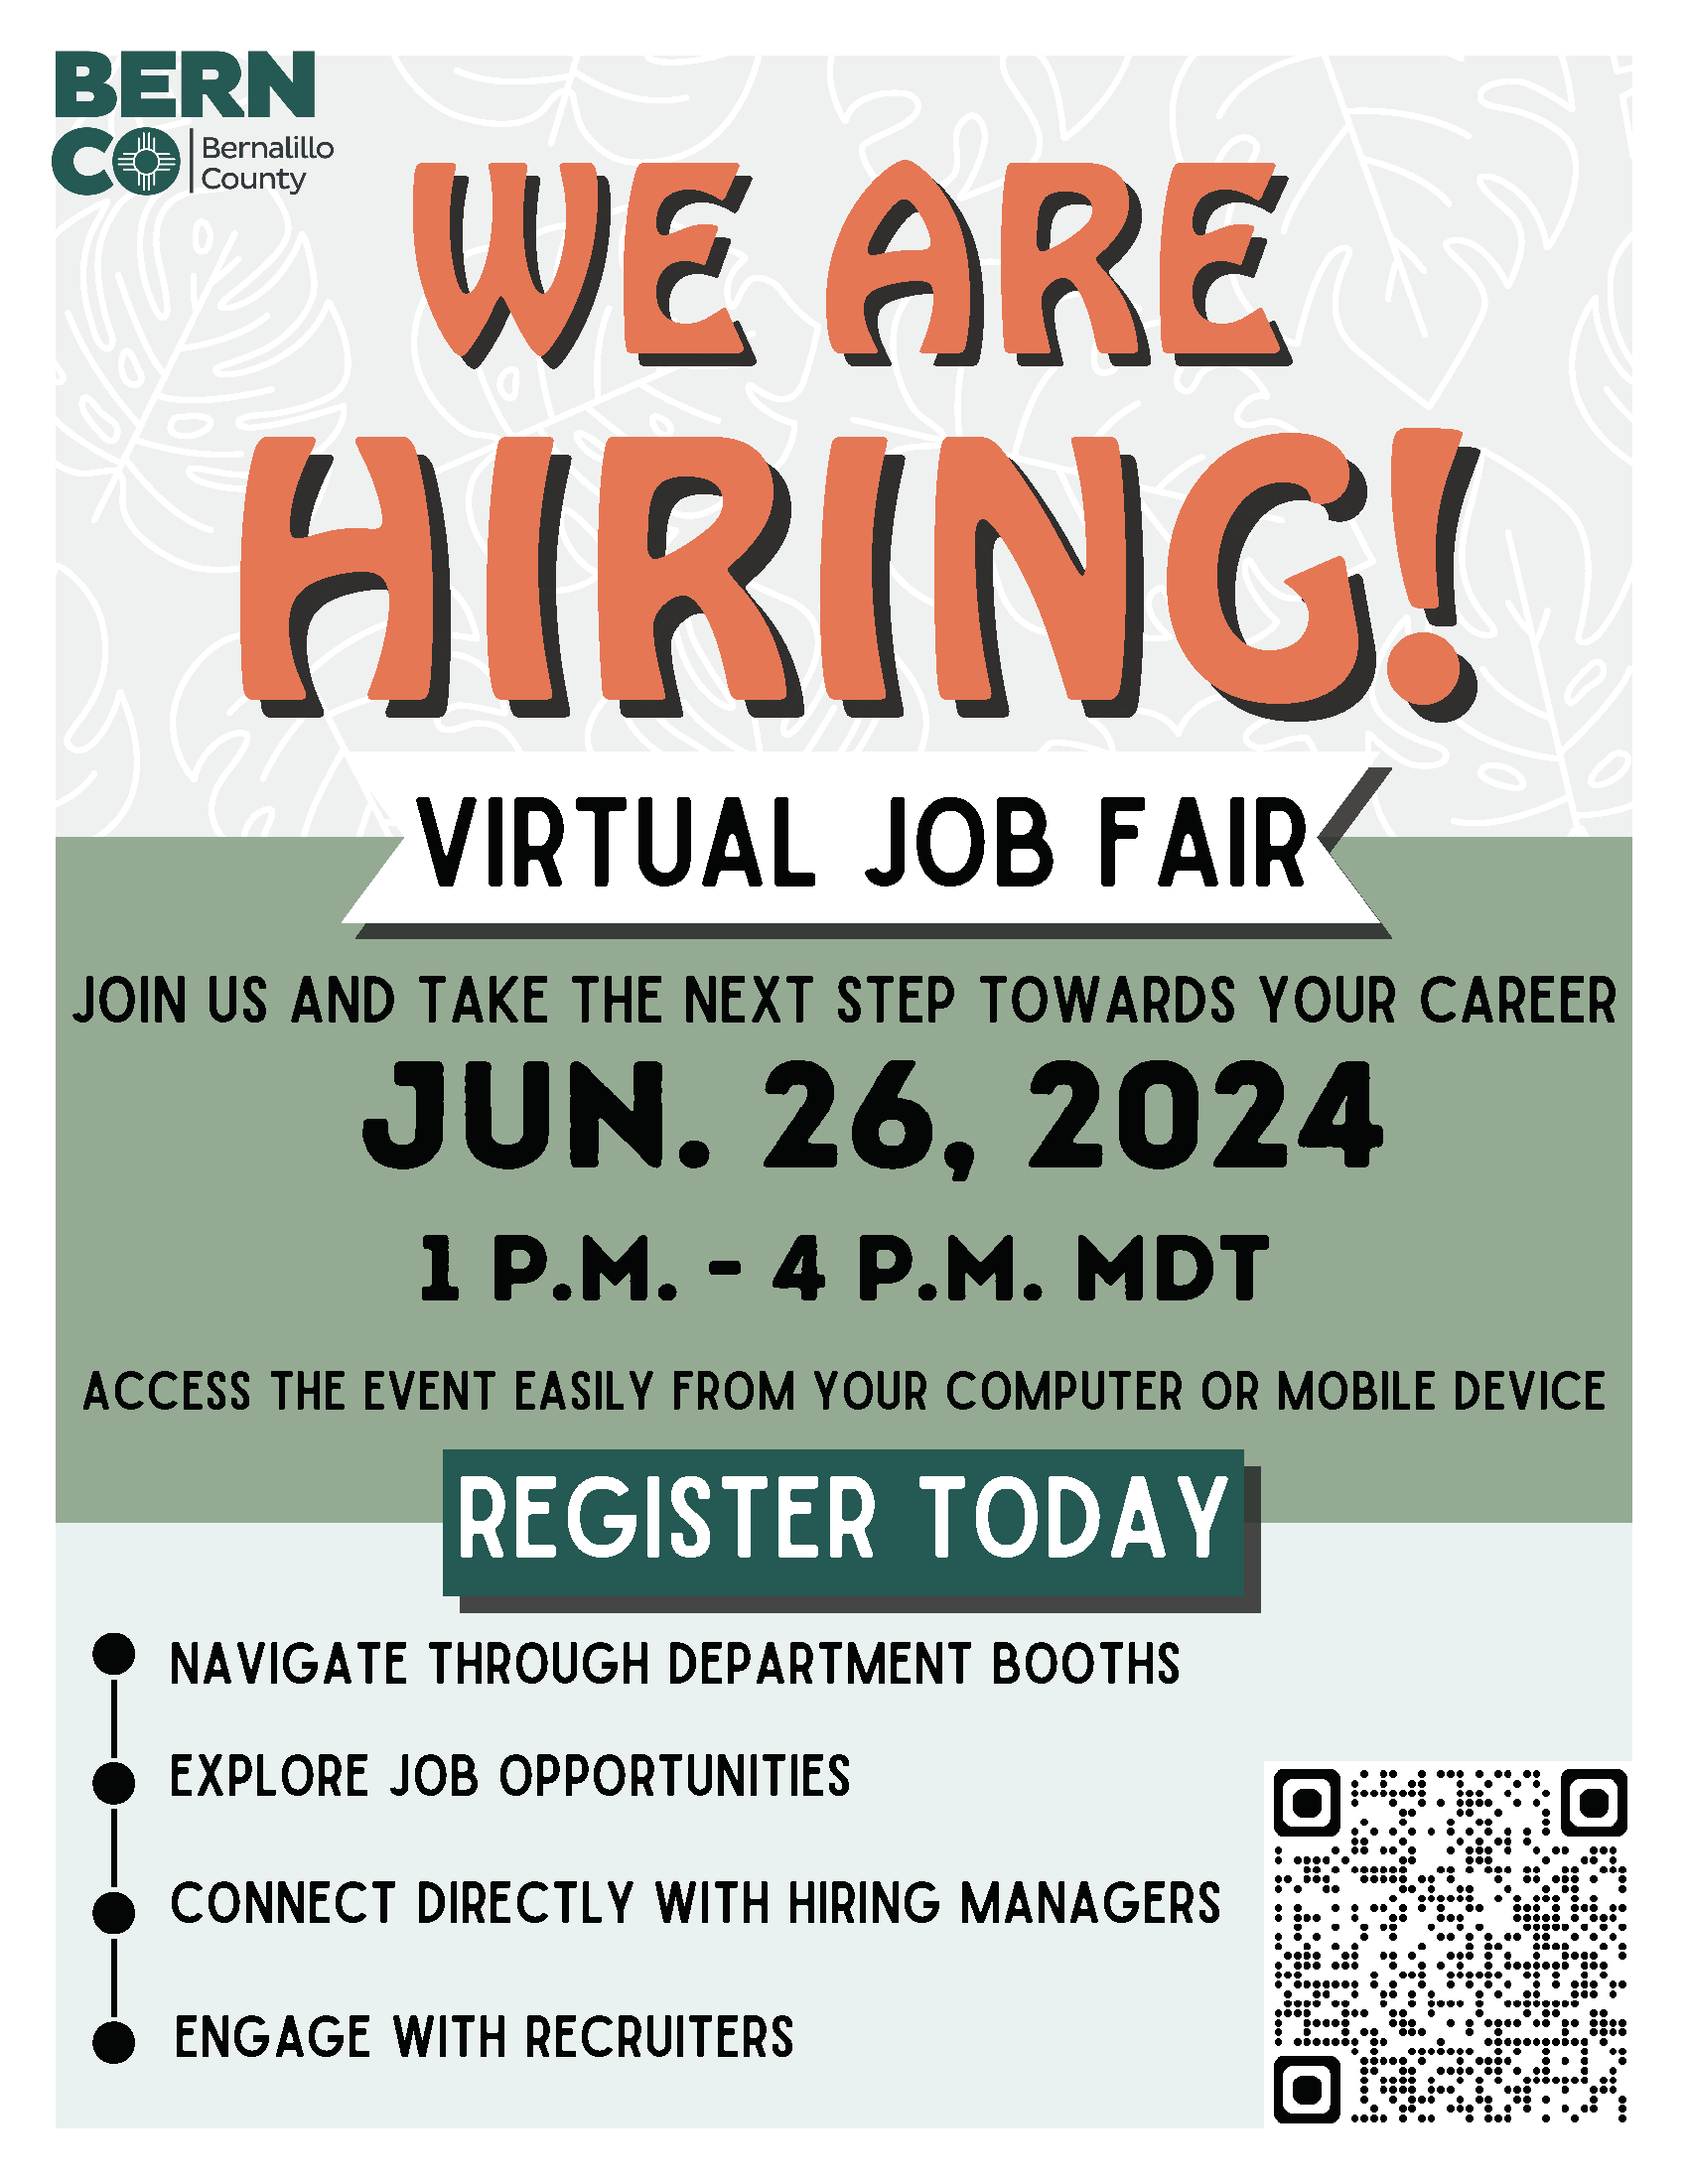 BernCo Virtual Job Fair June 26th, 2024 - Flyer